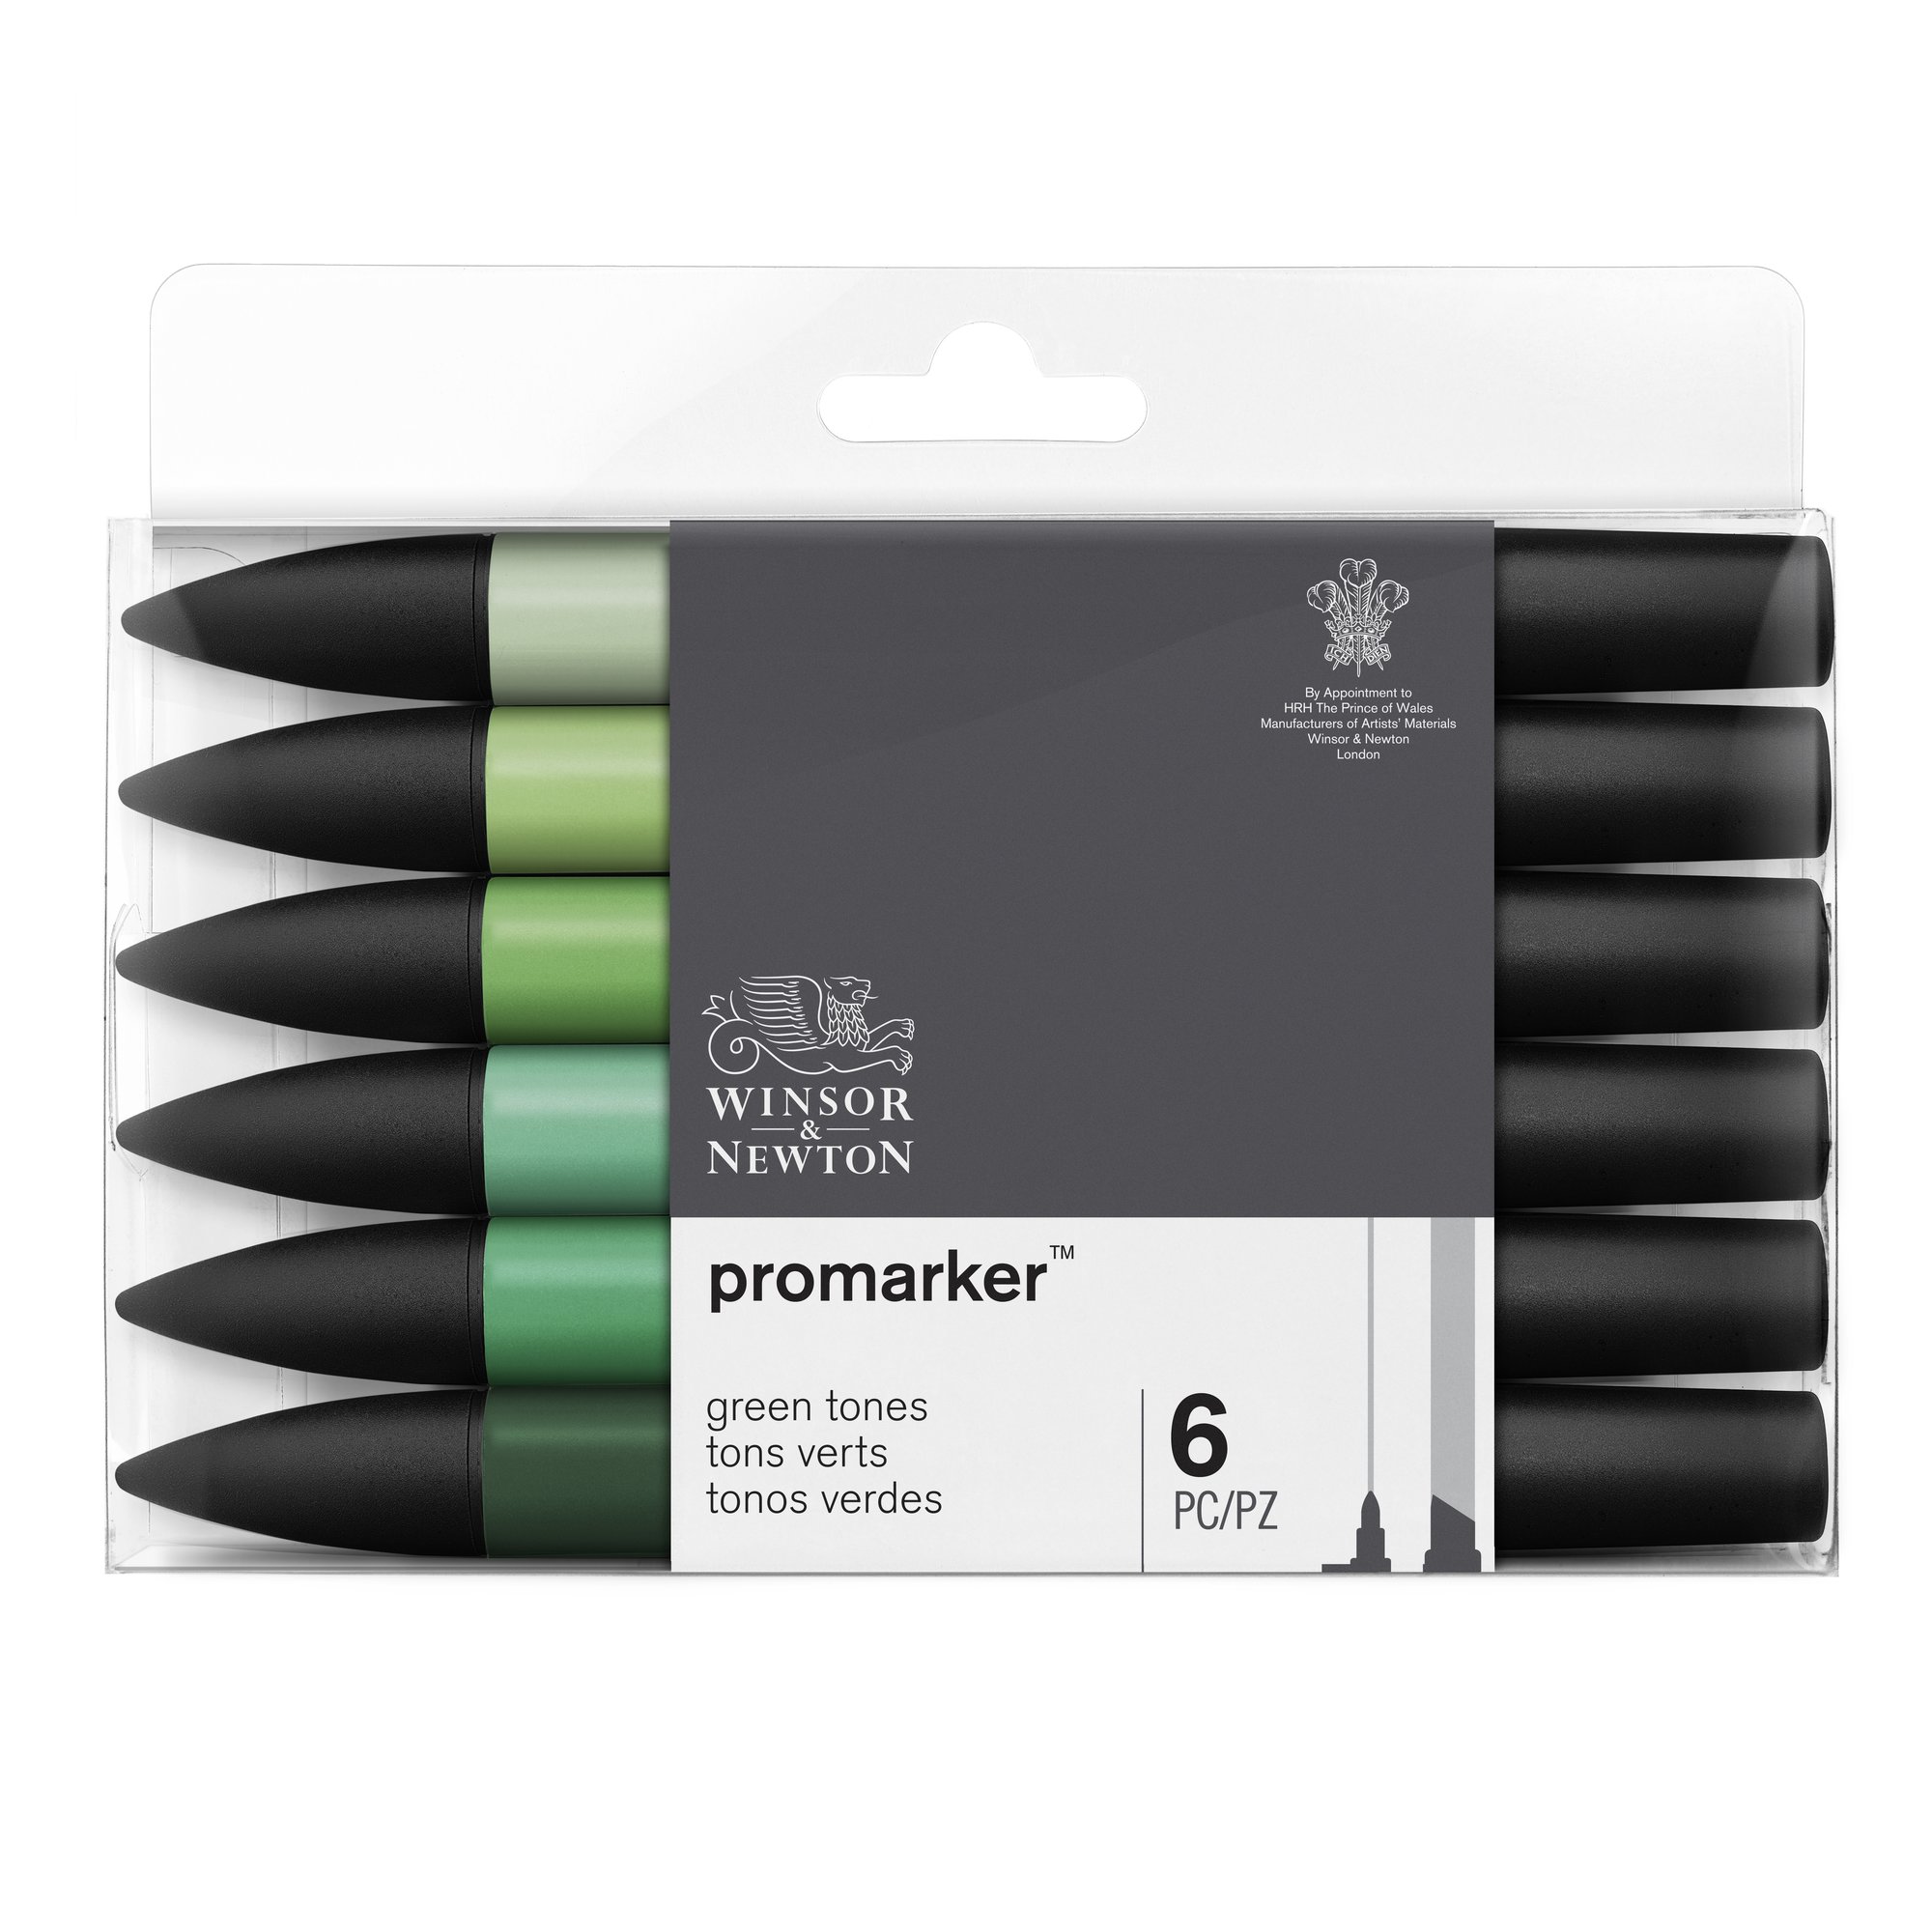 Promarker tonos verdes